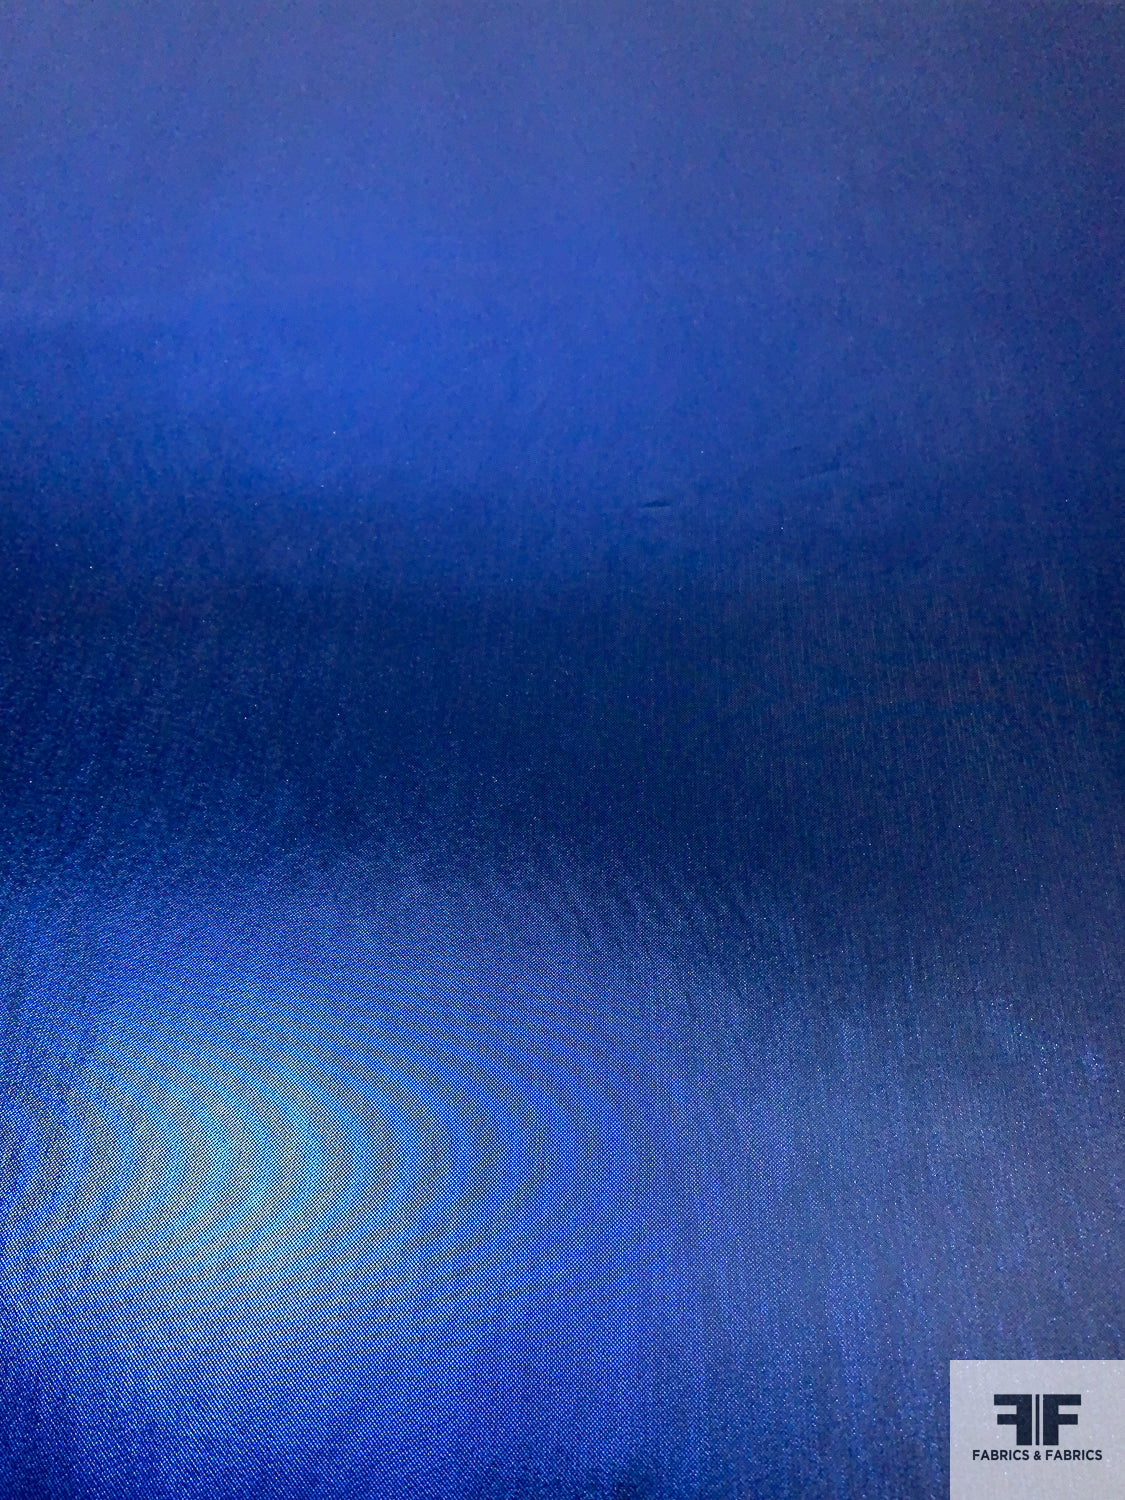 Printed Liquid Stretch Polyester Lamé - Metallic Blue / Black